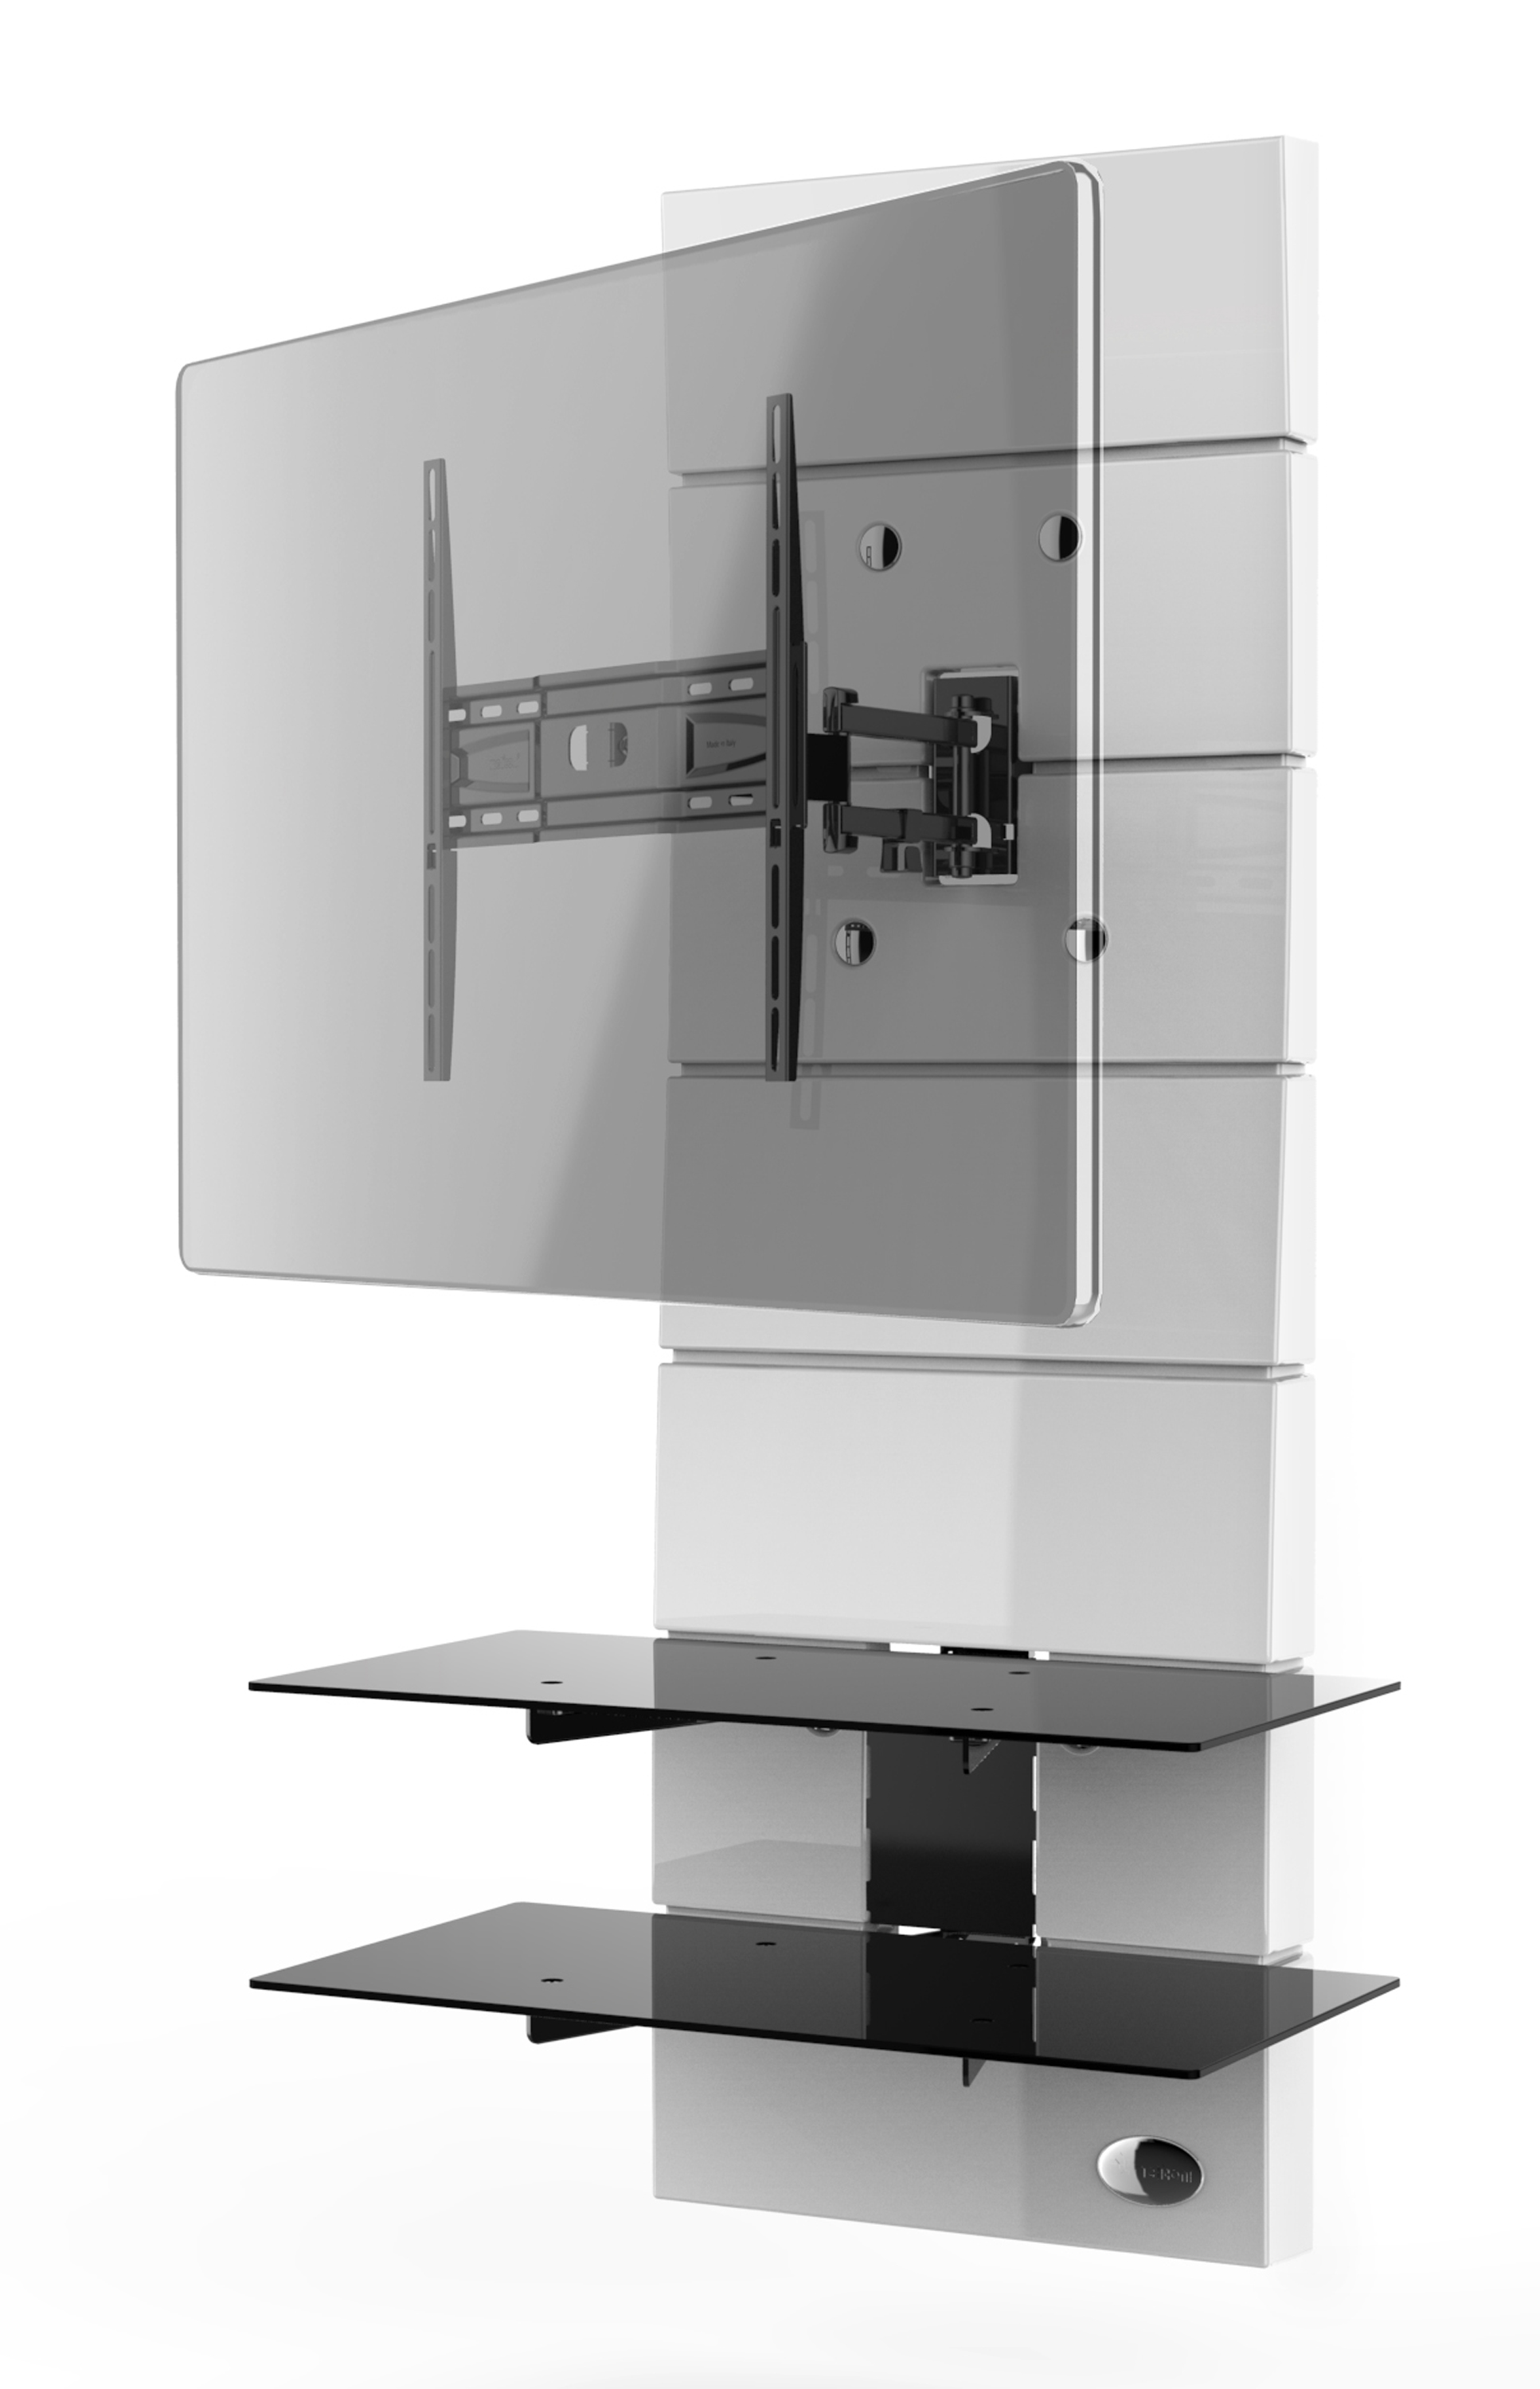 Ghost design 3000, wall cabinet double arm bracket multiple VESA, white